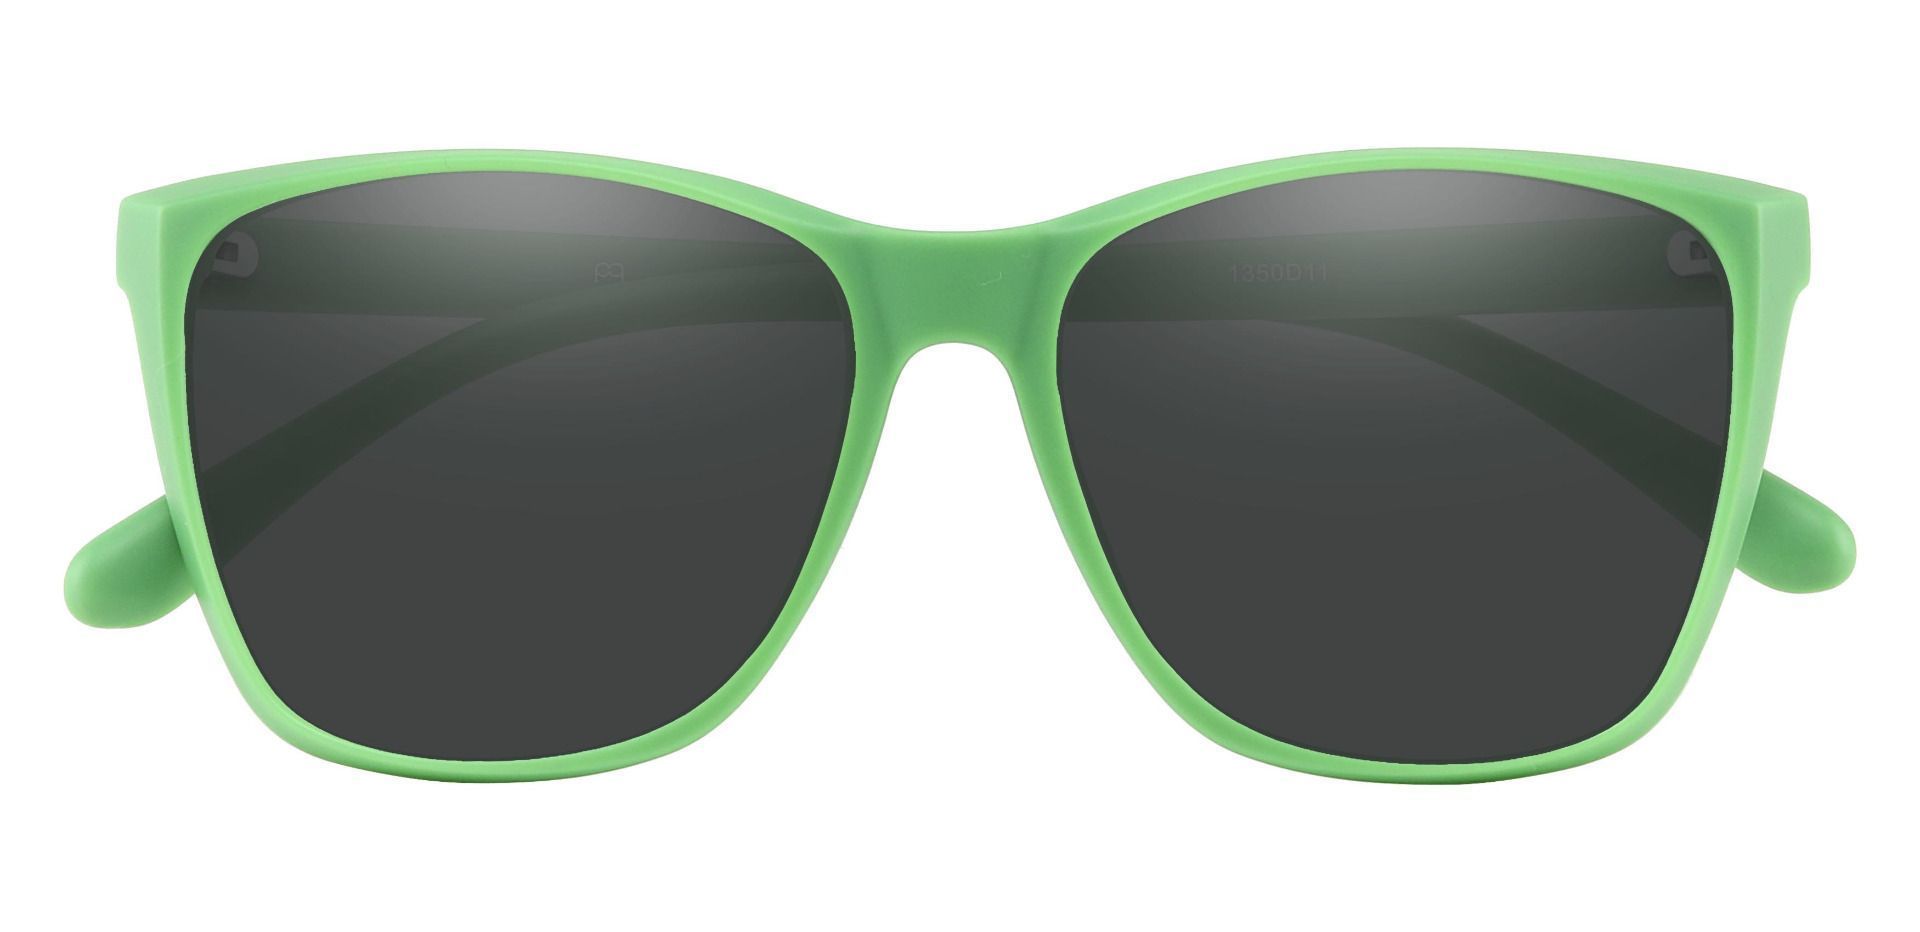 Hickory Square Prescription Sunglasses - Green Frame With Gray Lenses